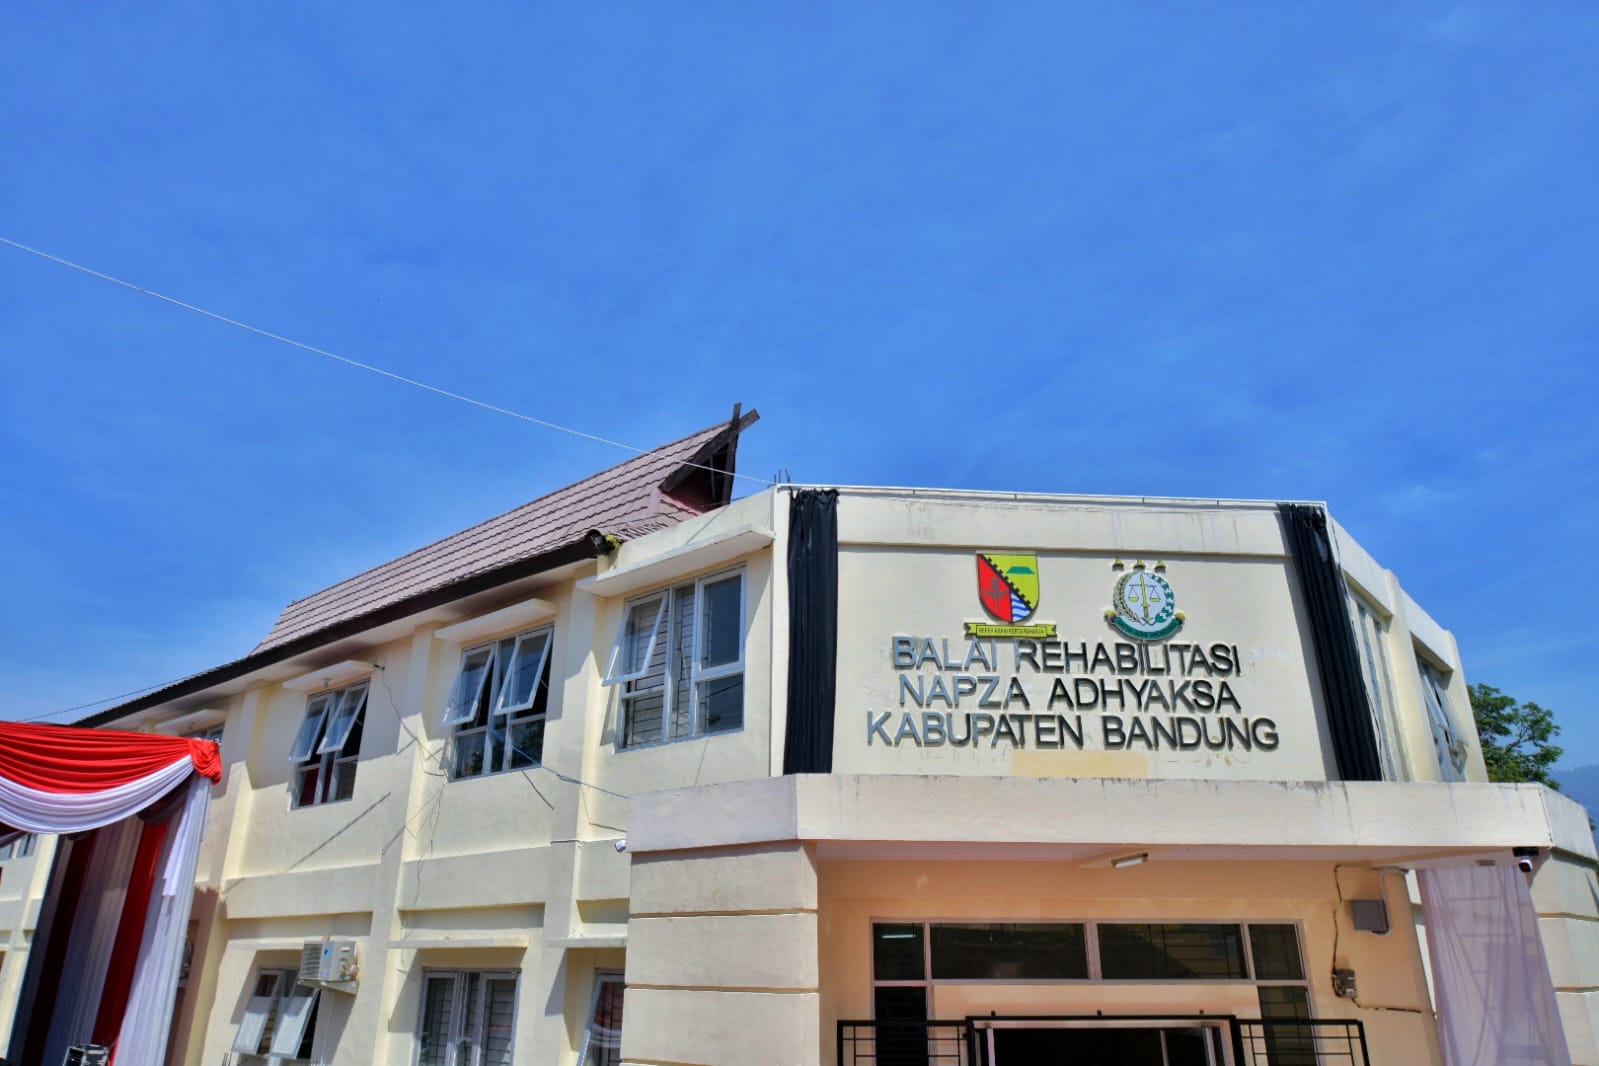 Balai Rehabilitasi Napza Adhyaksa di Bandung Sarana Pemulihan Tepat Kurangi Ketegantungan Narkoba